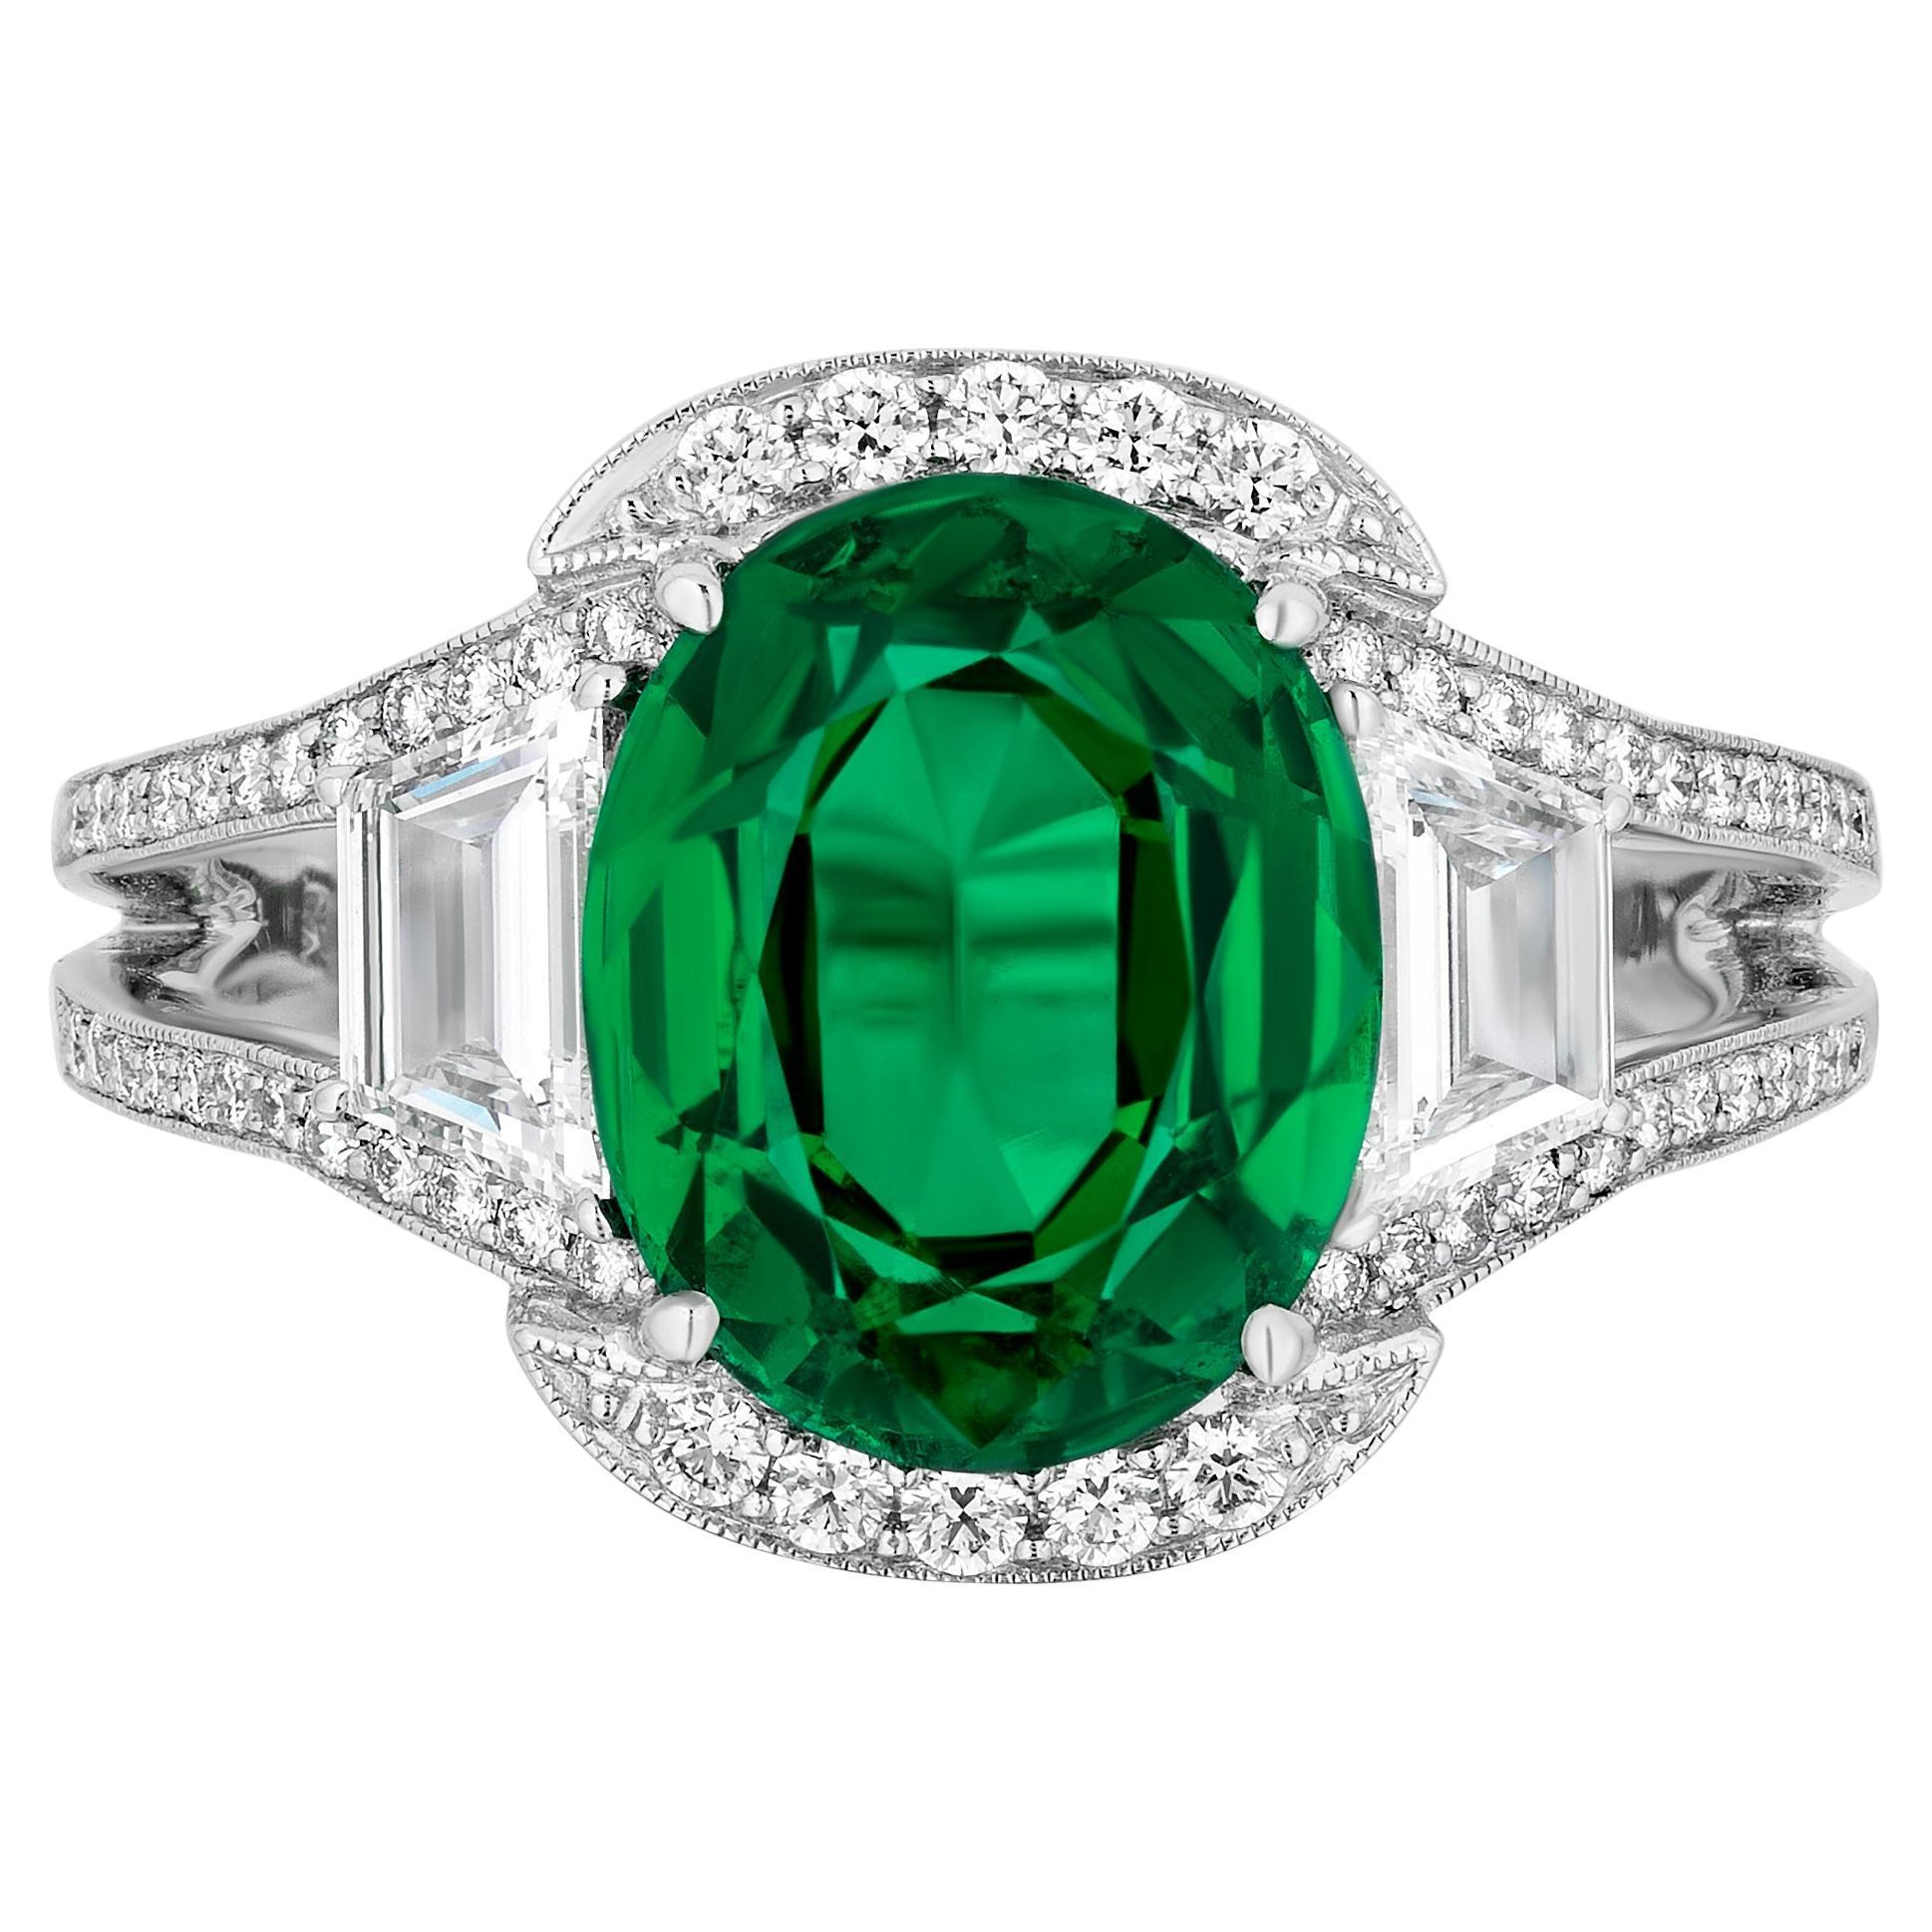 Sophia D. 3.69 Carat Emerald Ring